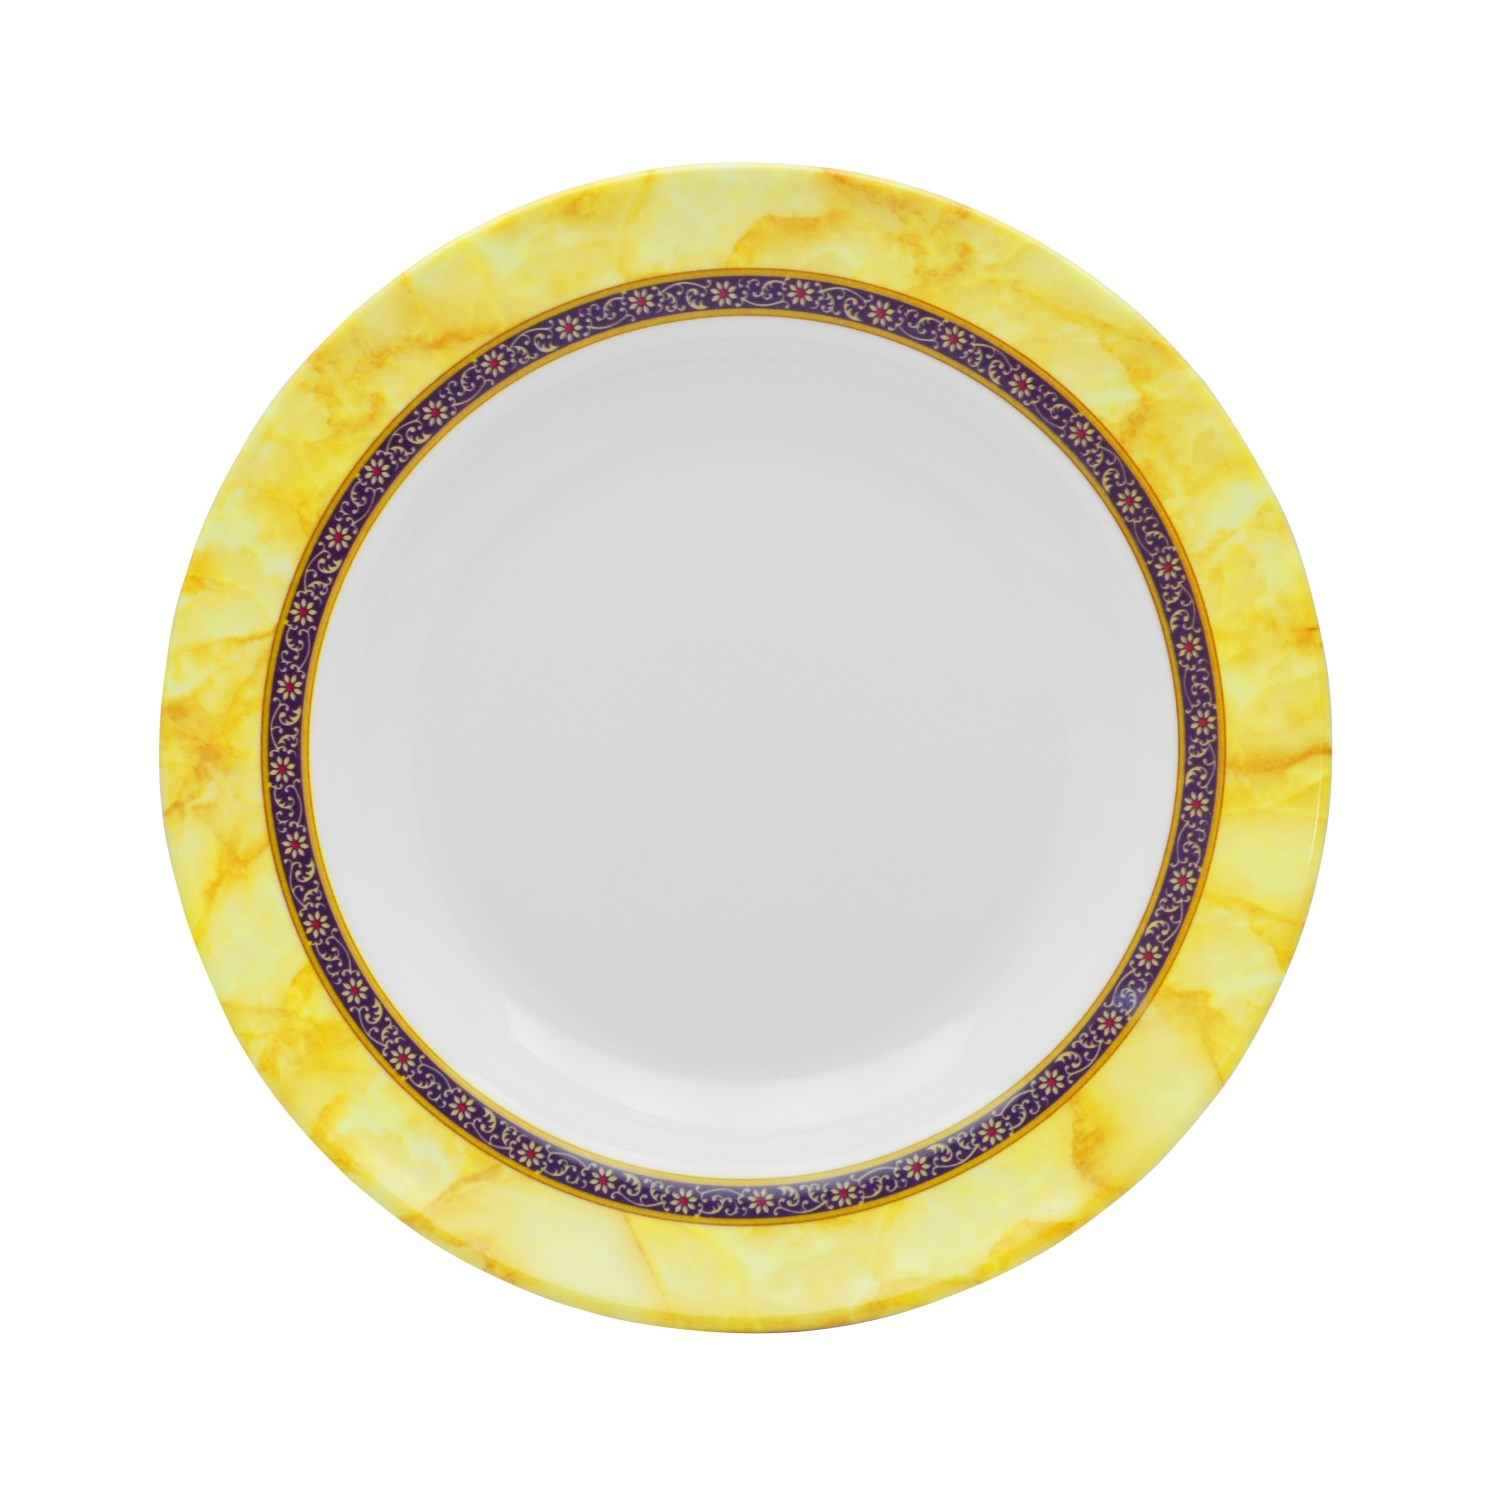 Dinewell Melamine Soup Plate